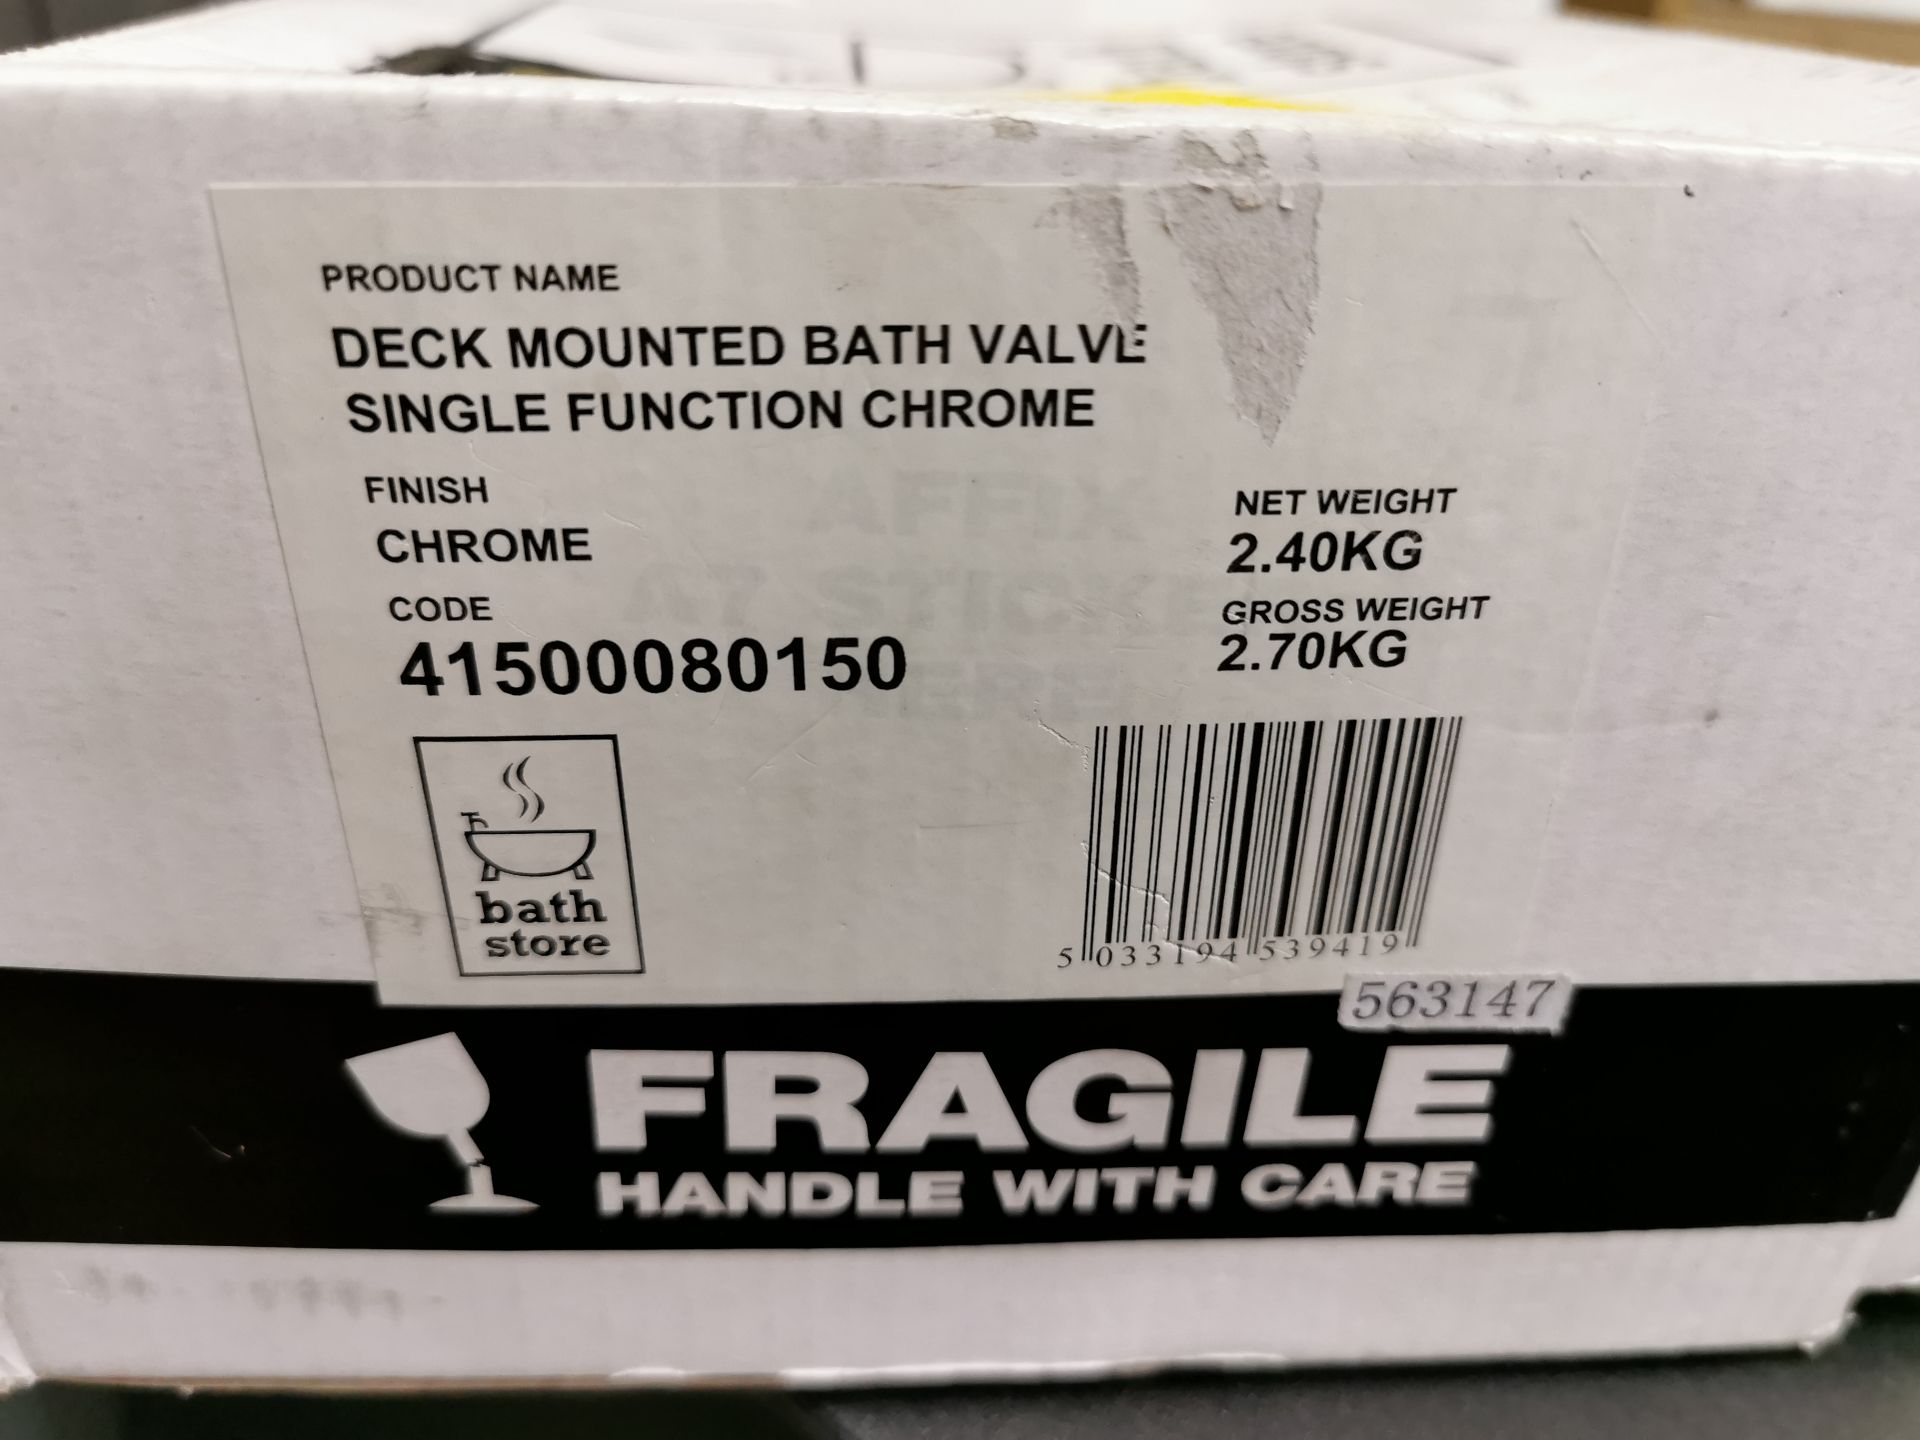 Deck Mounted Multi-Function Bath Valve Unit RRP £229 - Image 2 of 2